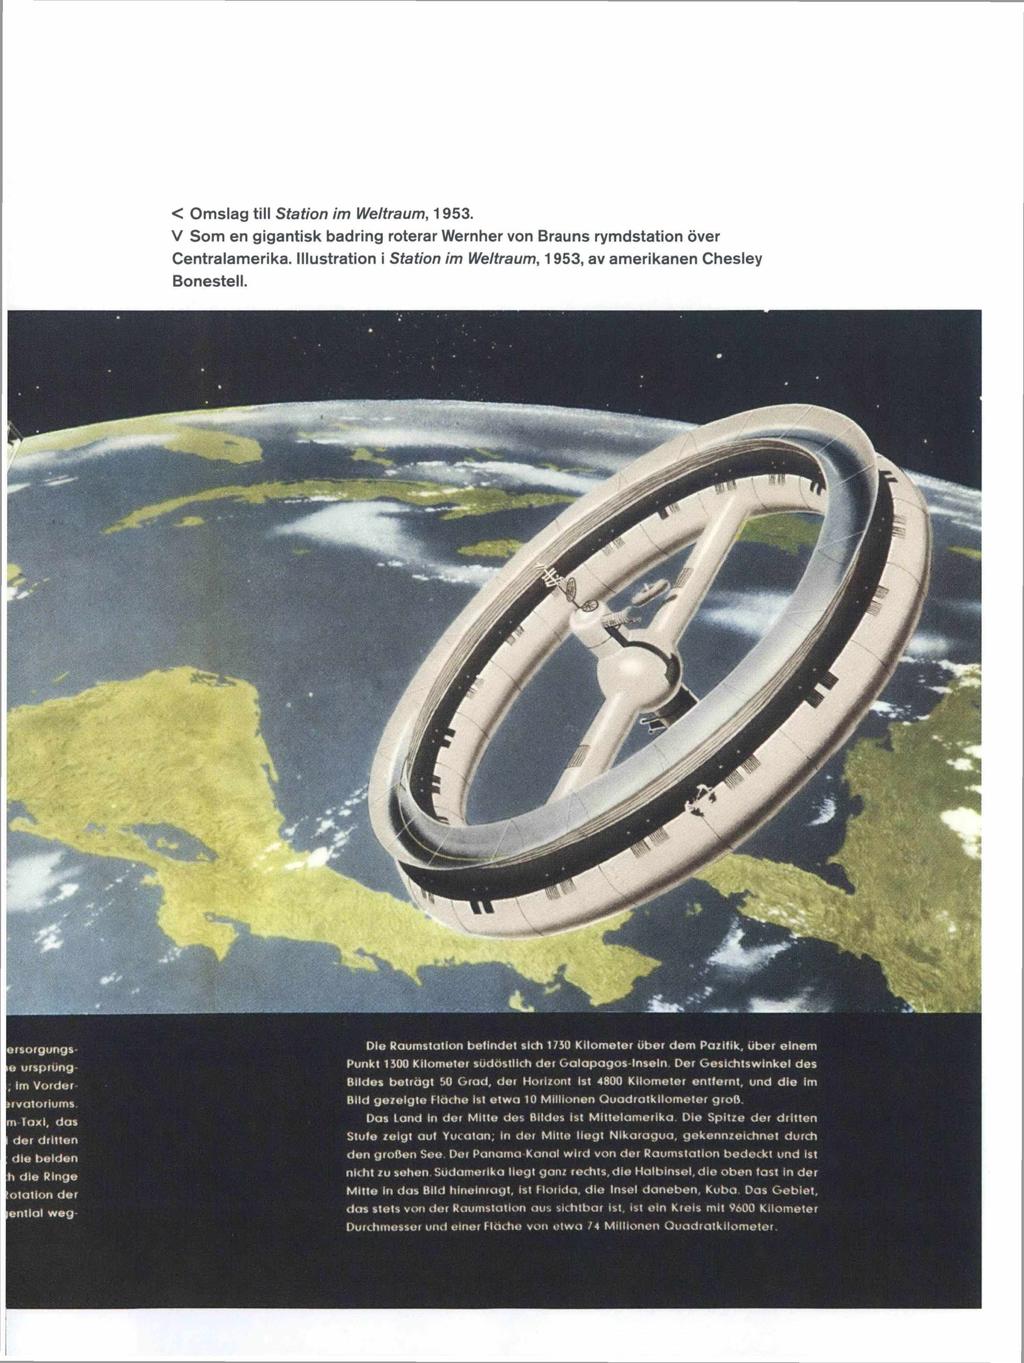 < Omslag till Station im Weltraum, 1953. V Som en gigantisk badring roterar Wernher von Brauns rymdstation över Centralamerika.